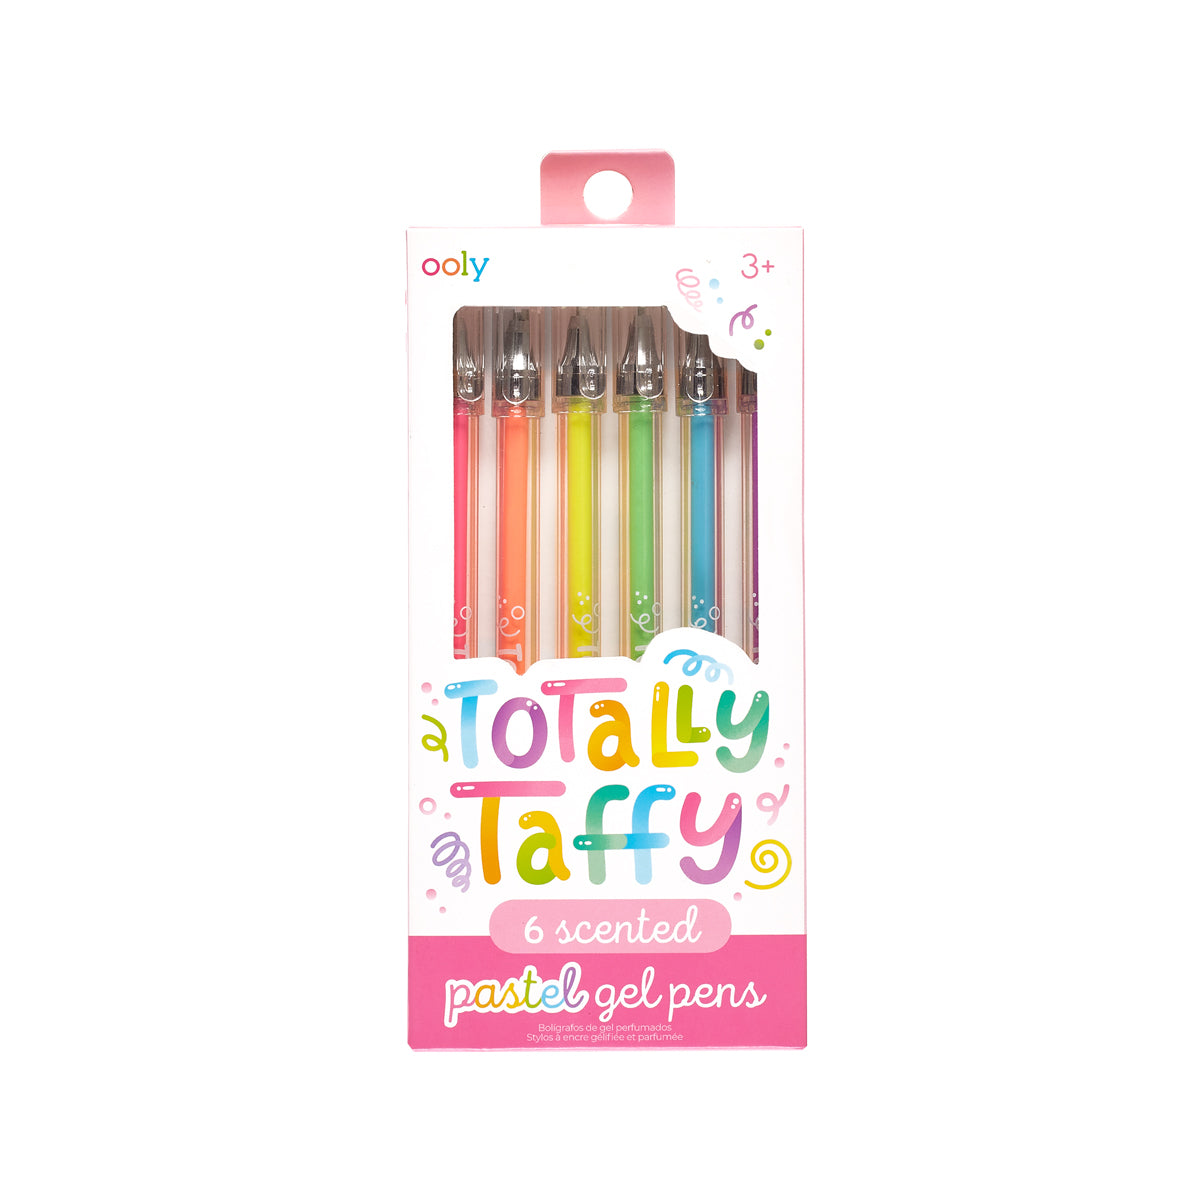 Sugar Rush Candy Scented Glitter Gel Pens, 5-Pack